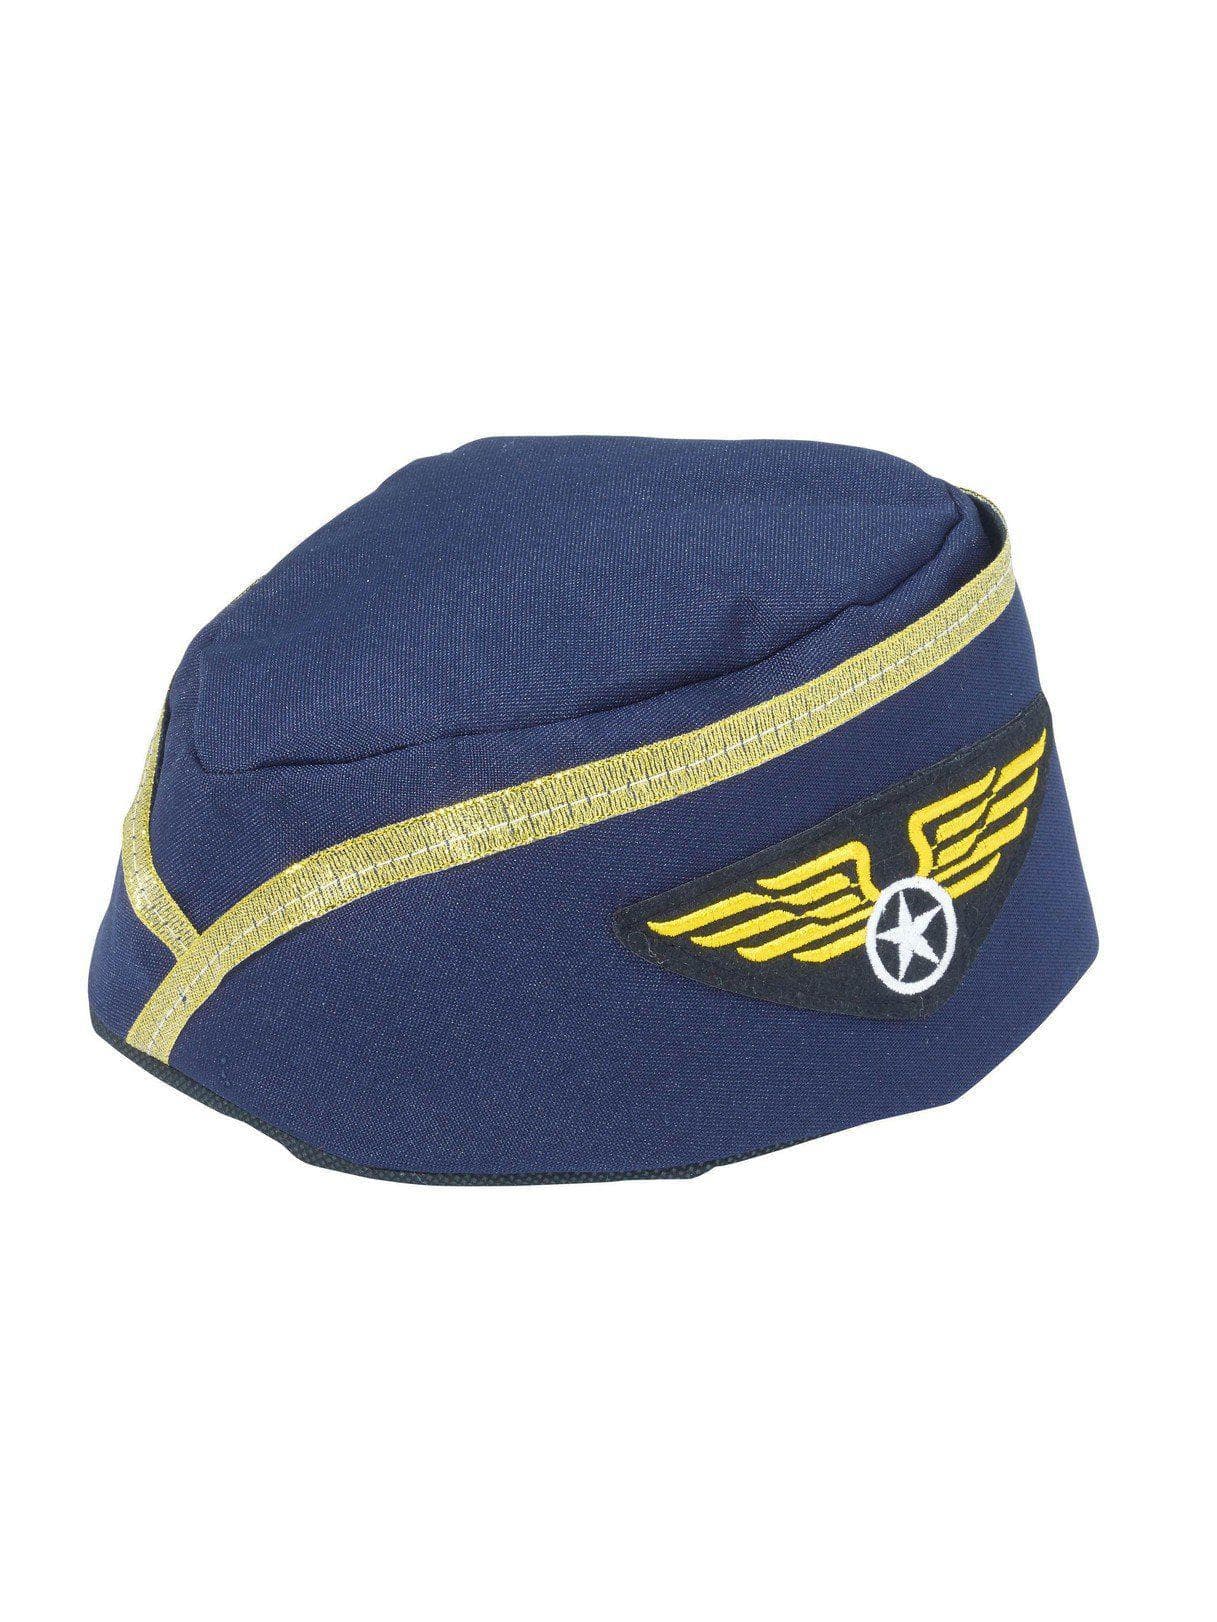 Adult Blue Stewardess Hat - costumes.com